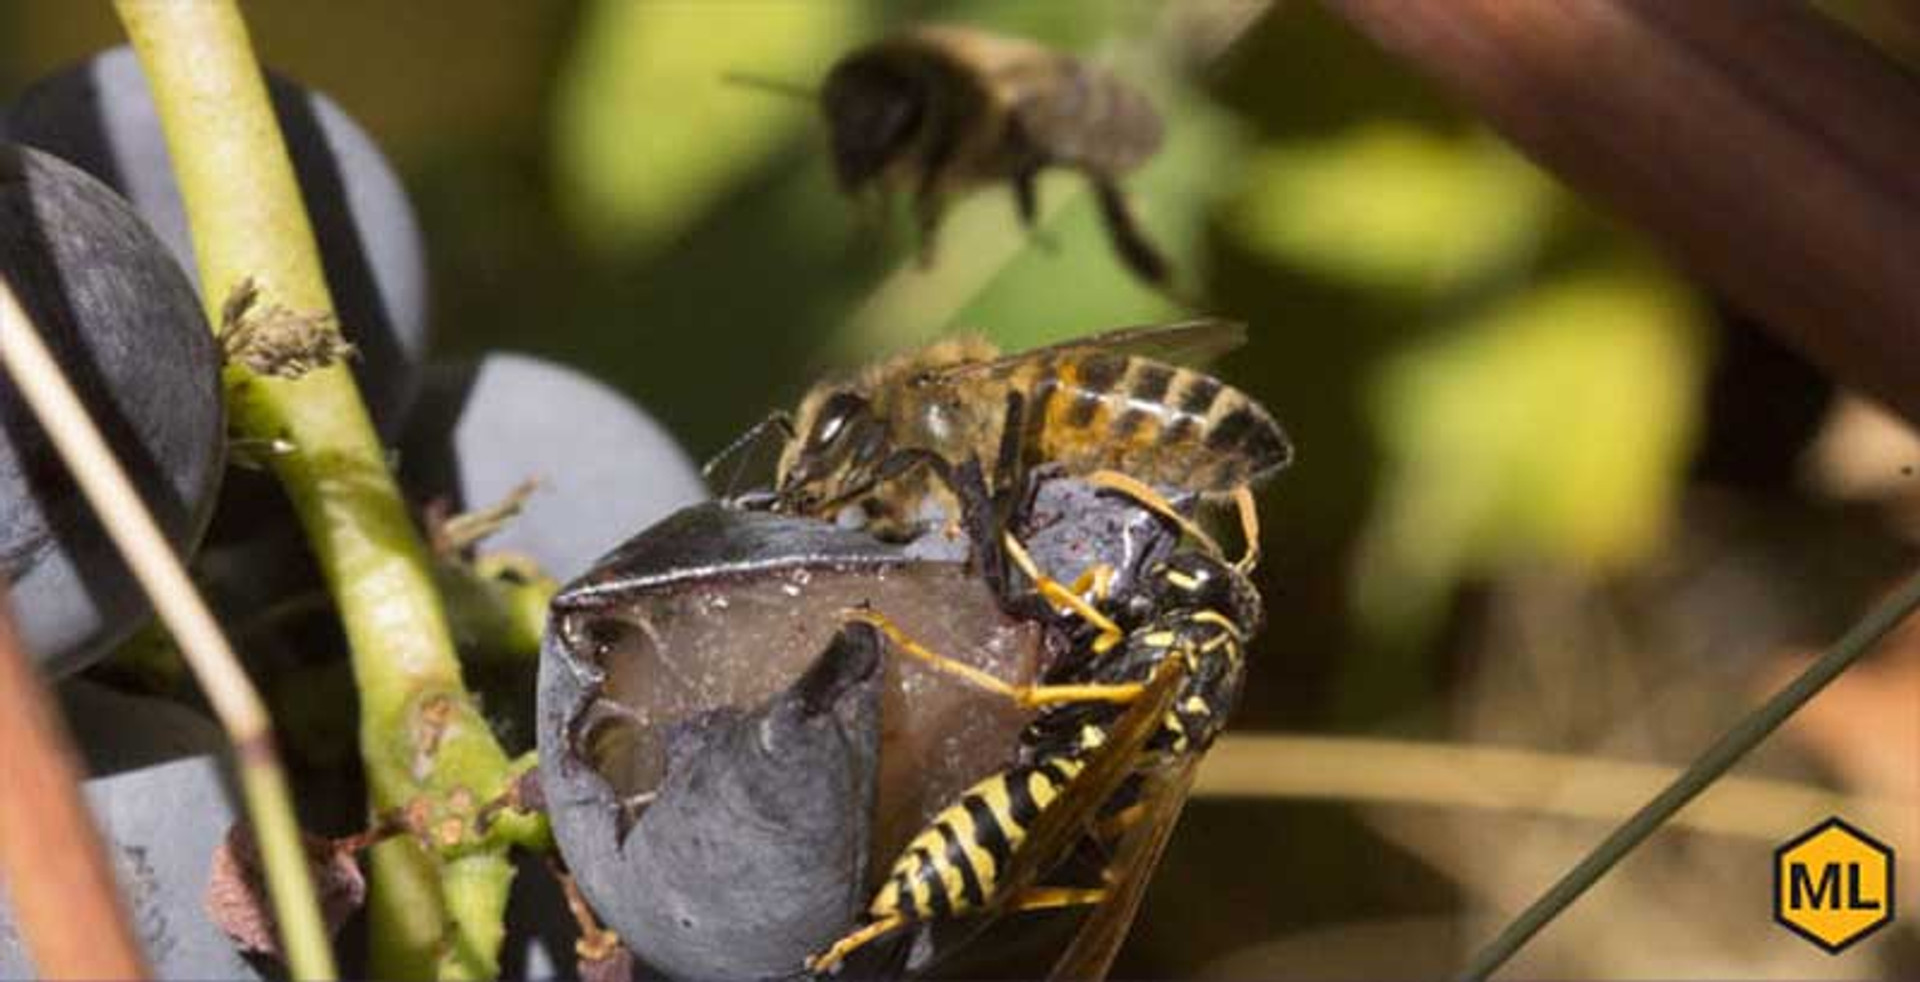 yellow jacket vs honey bee